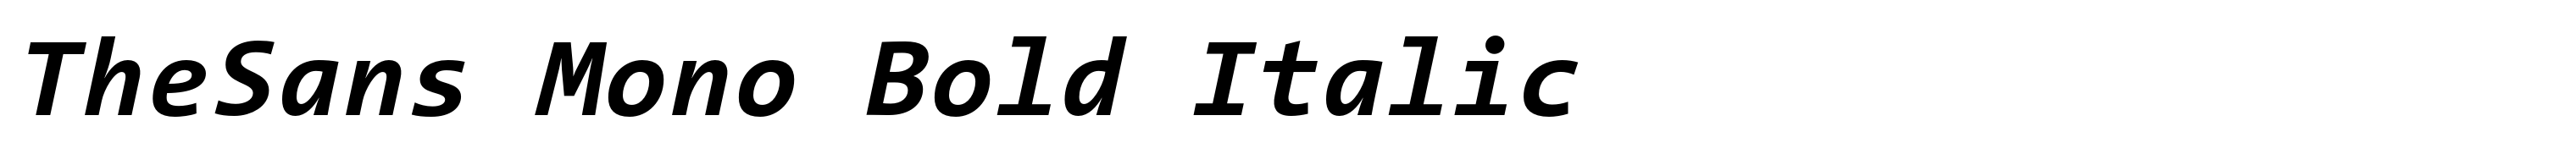 TheSans Mono Bold Italic